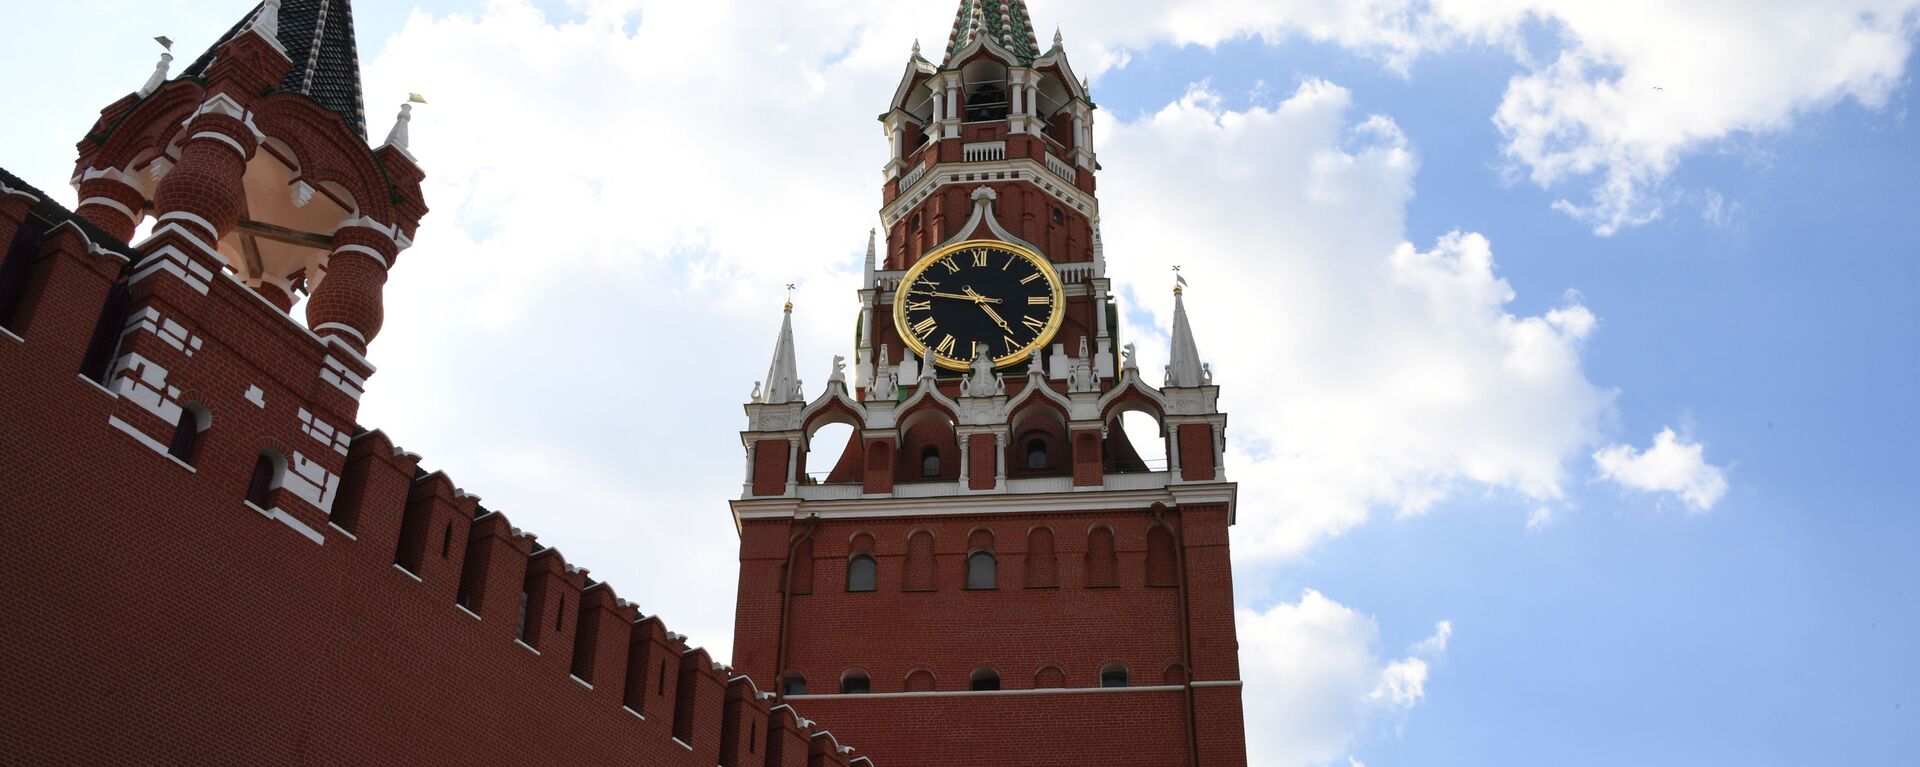 Spasskaya (right) and the Tsar’s towers of the Moscow Kremlin. - Sputnik International, 1920, 18.12.2020